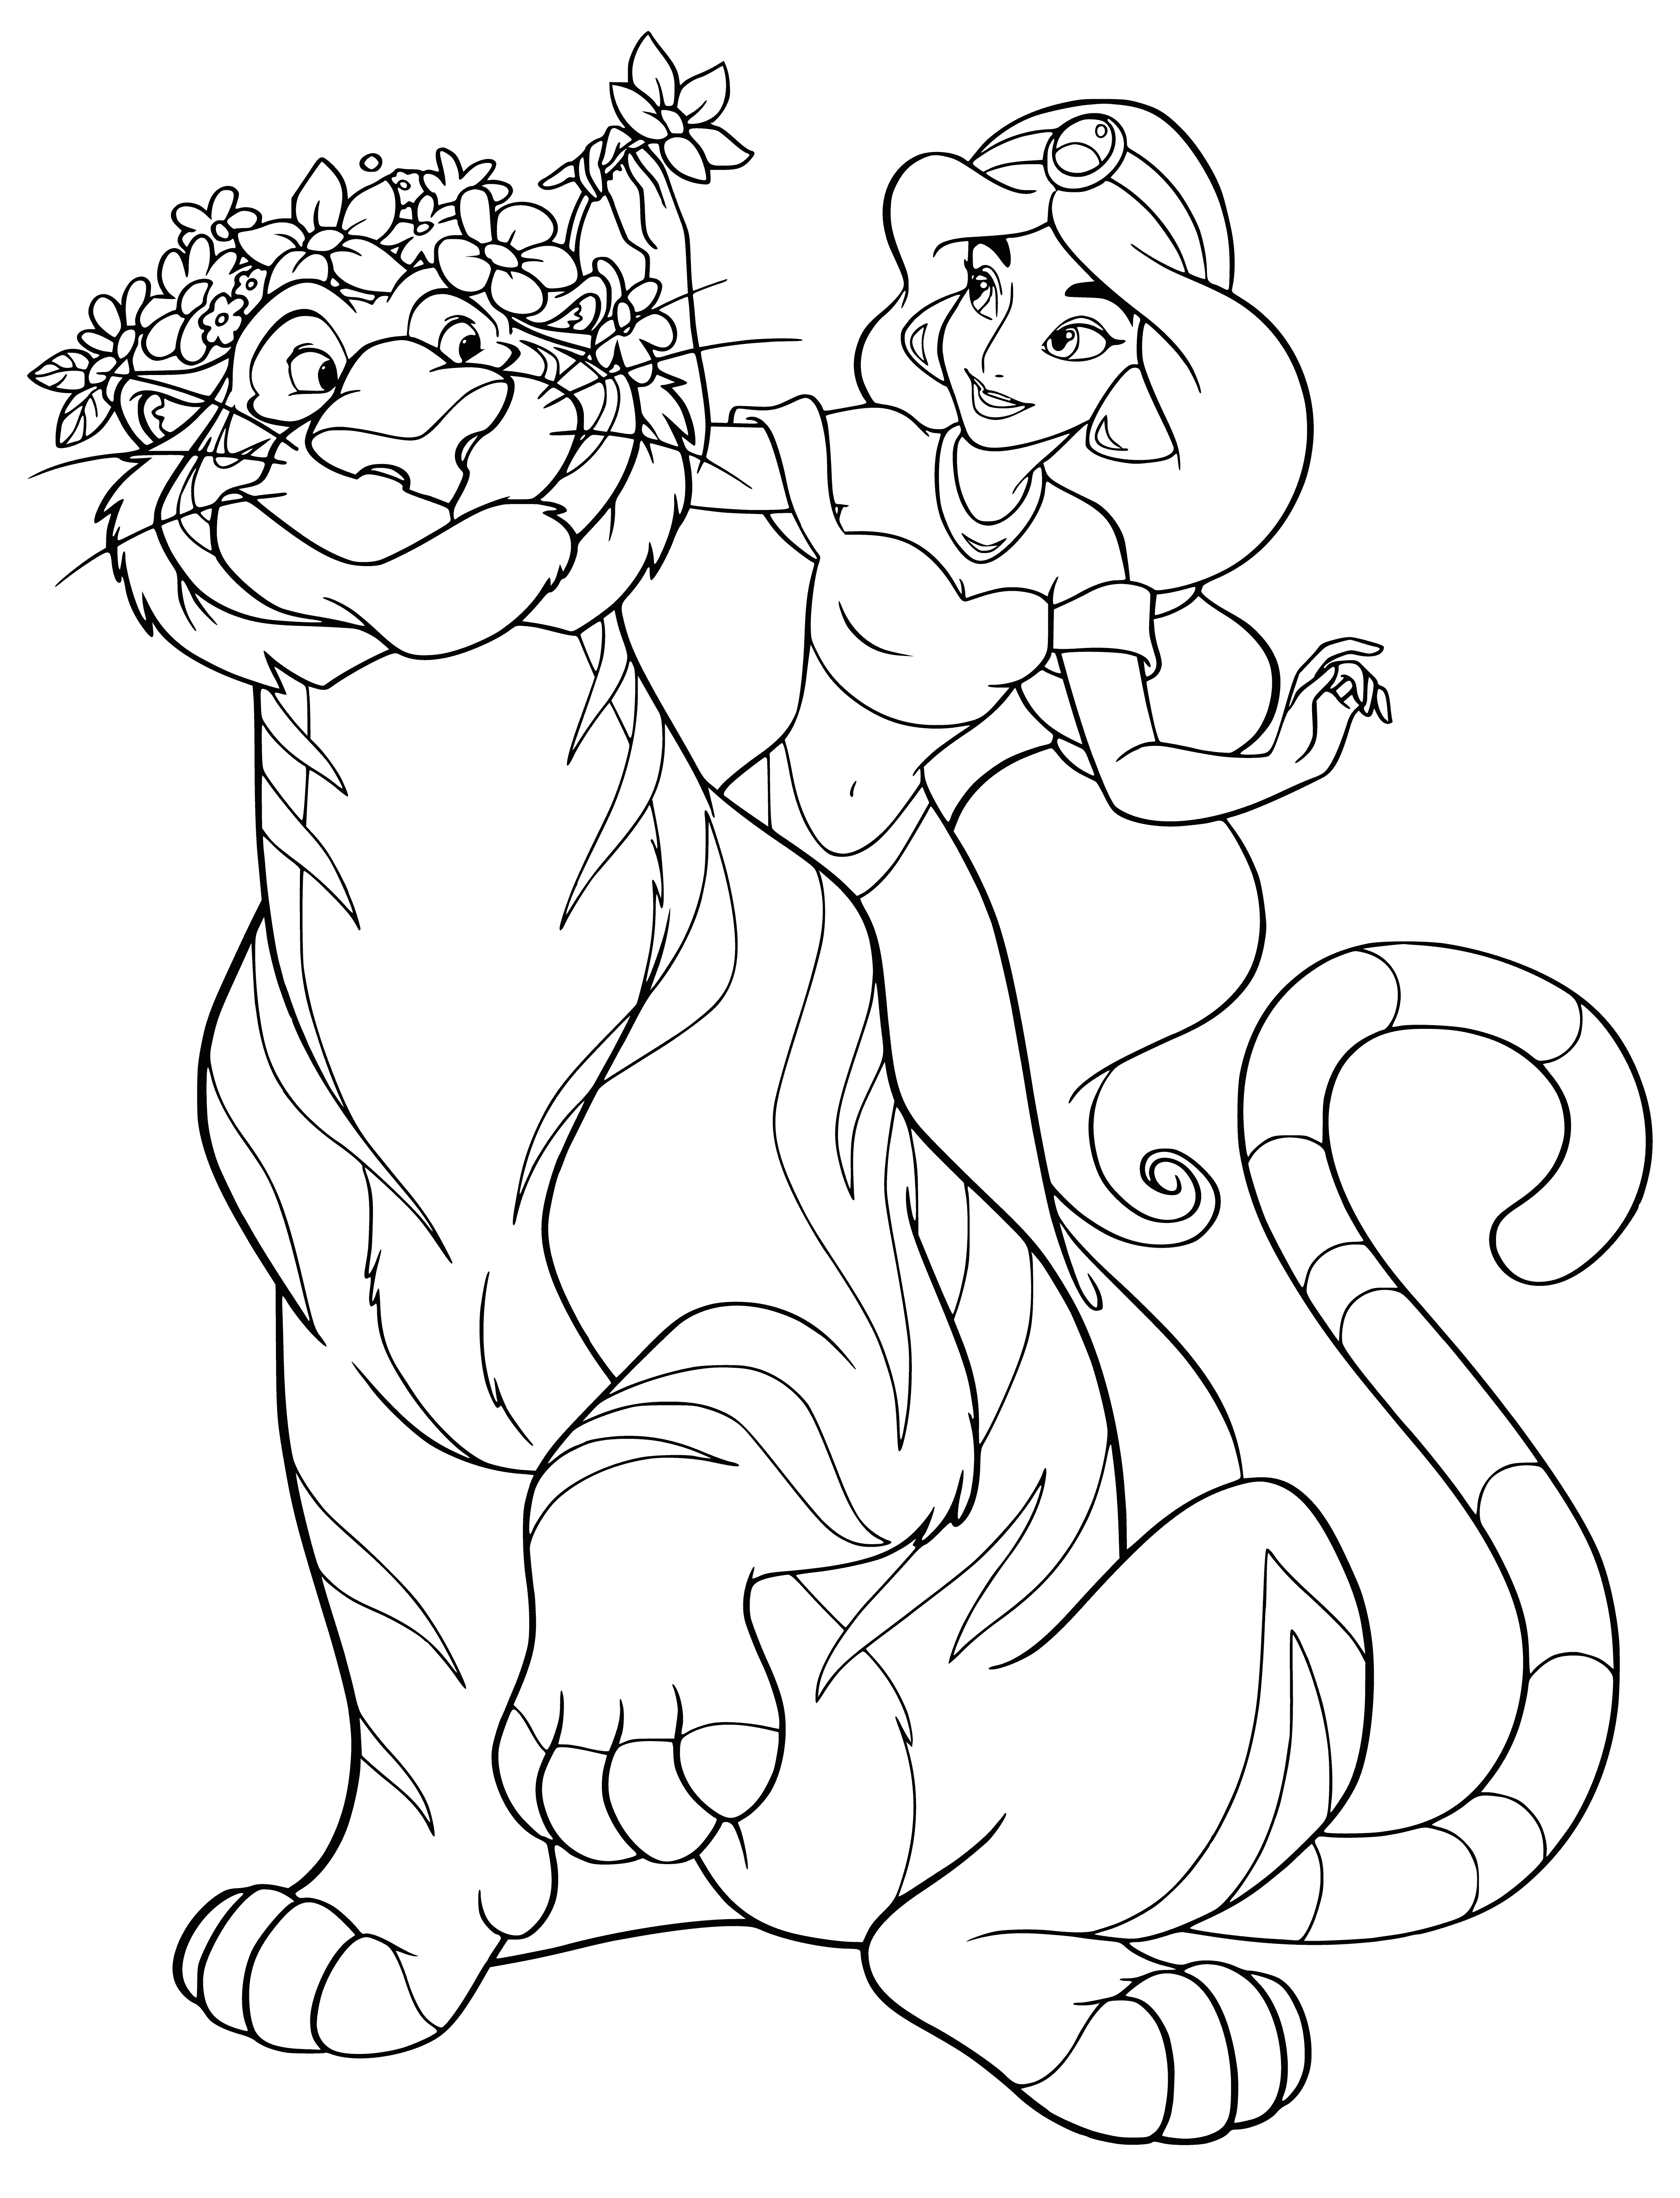 Jasmine and Tiger Raja coloring page